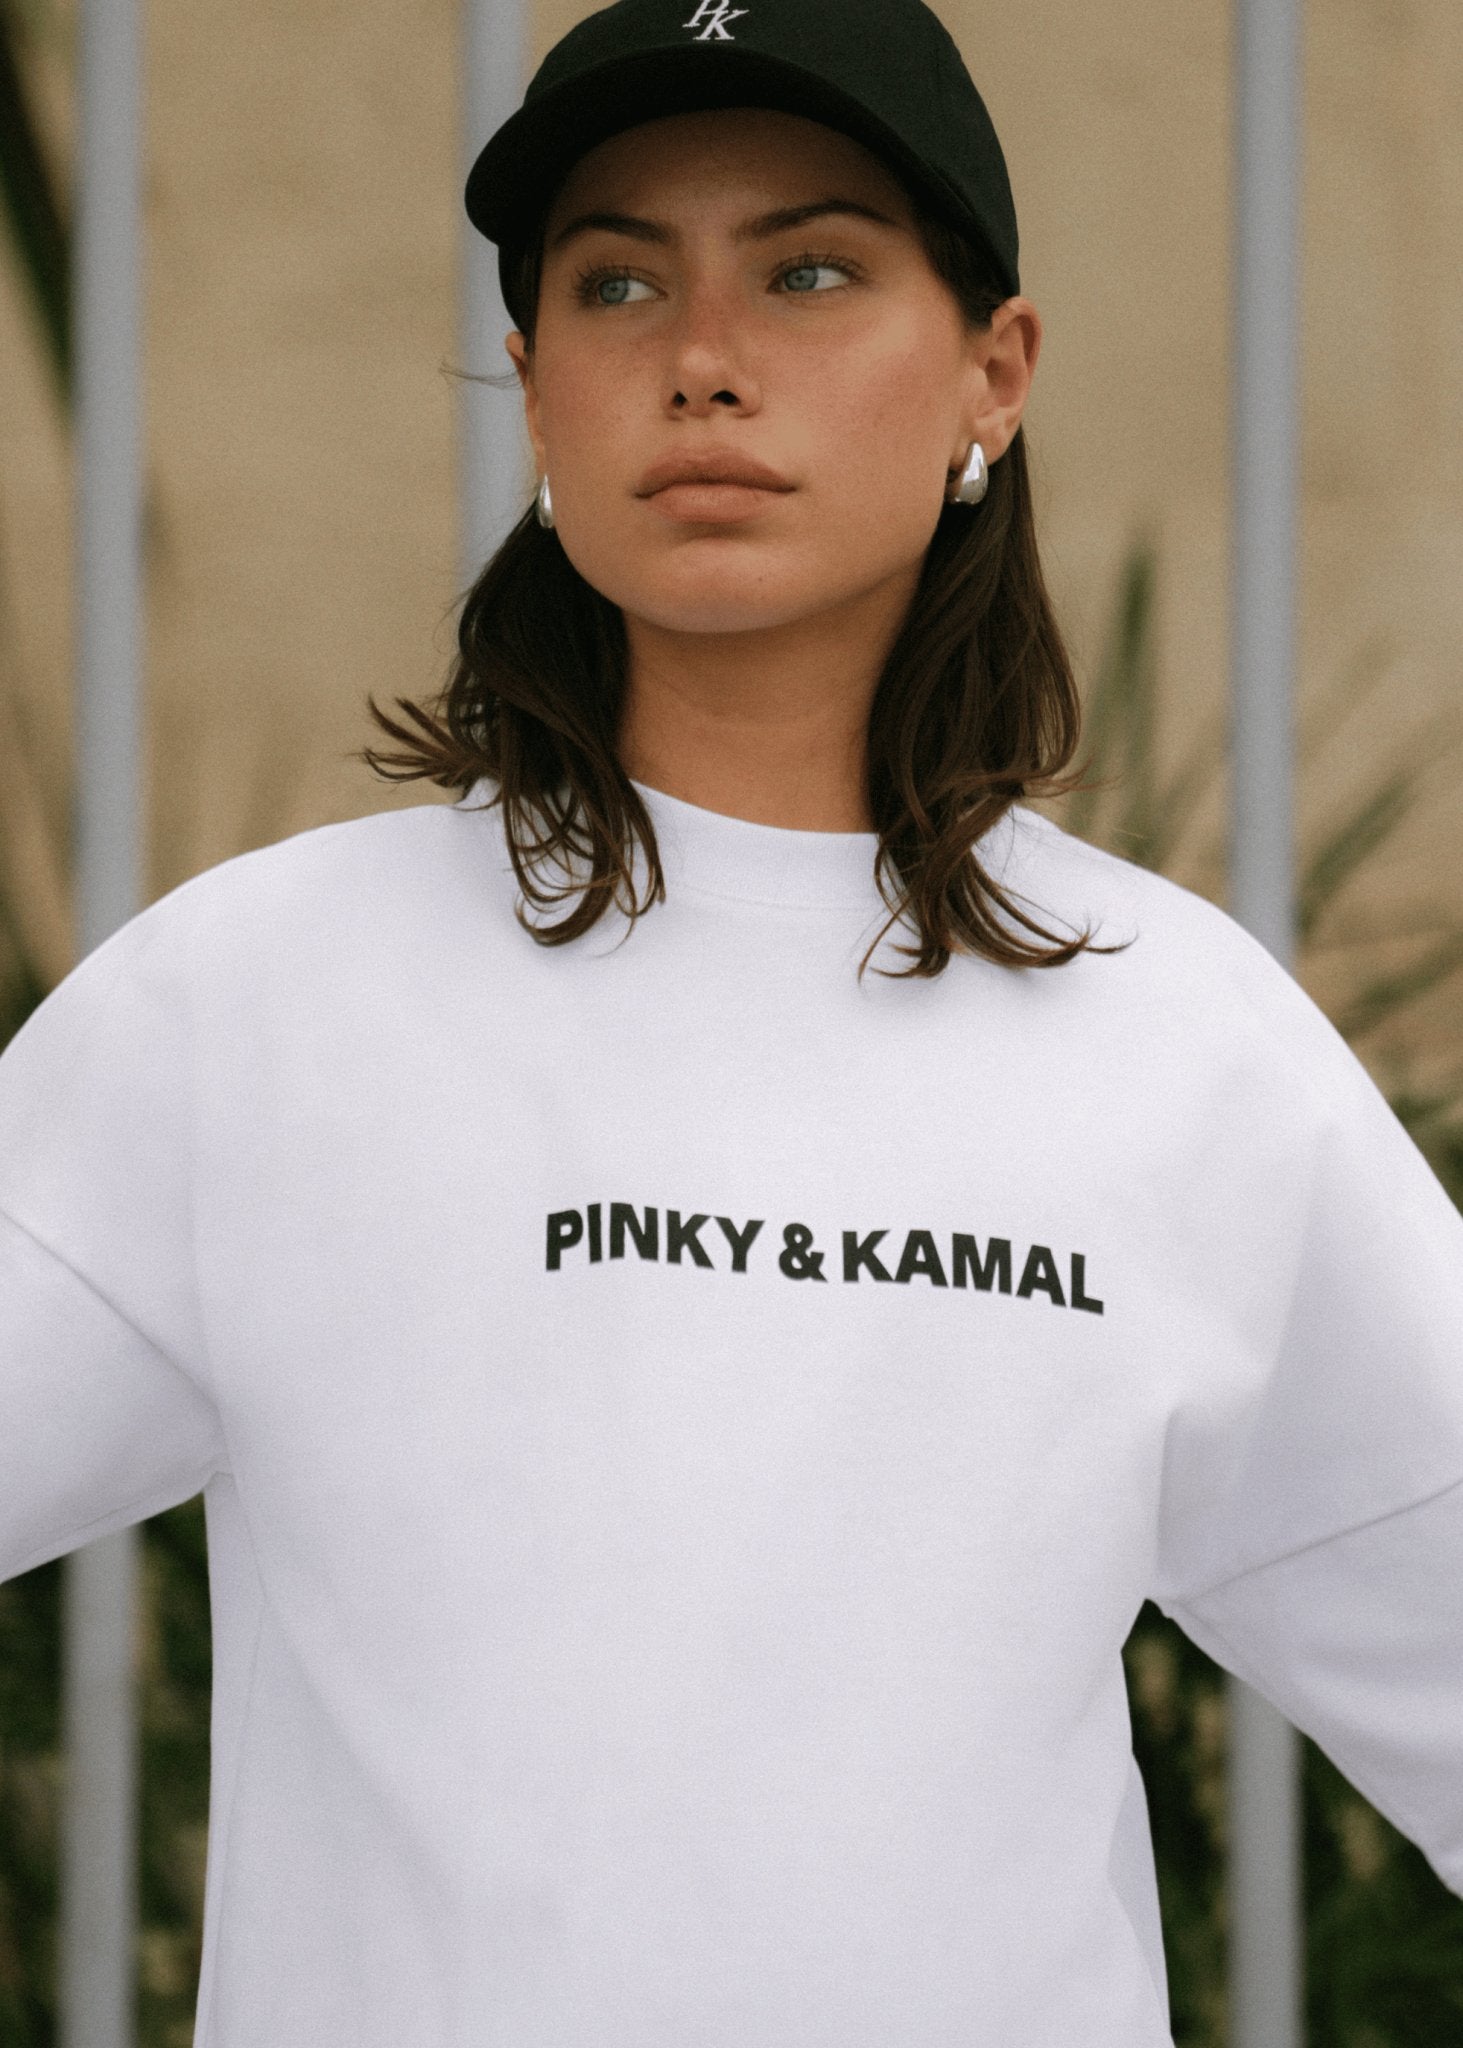 Pinky & Kamal T - Shirt - White/Black - Pinky & Kamal - stride